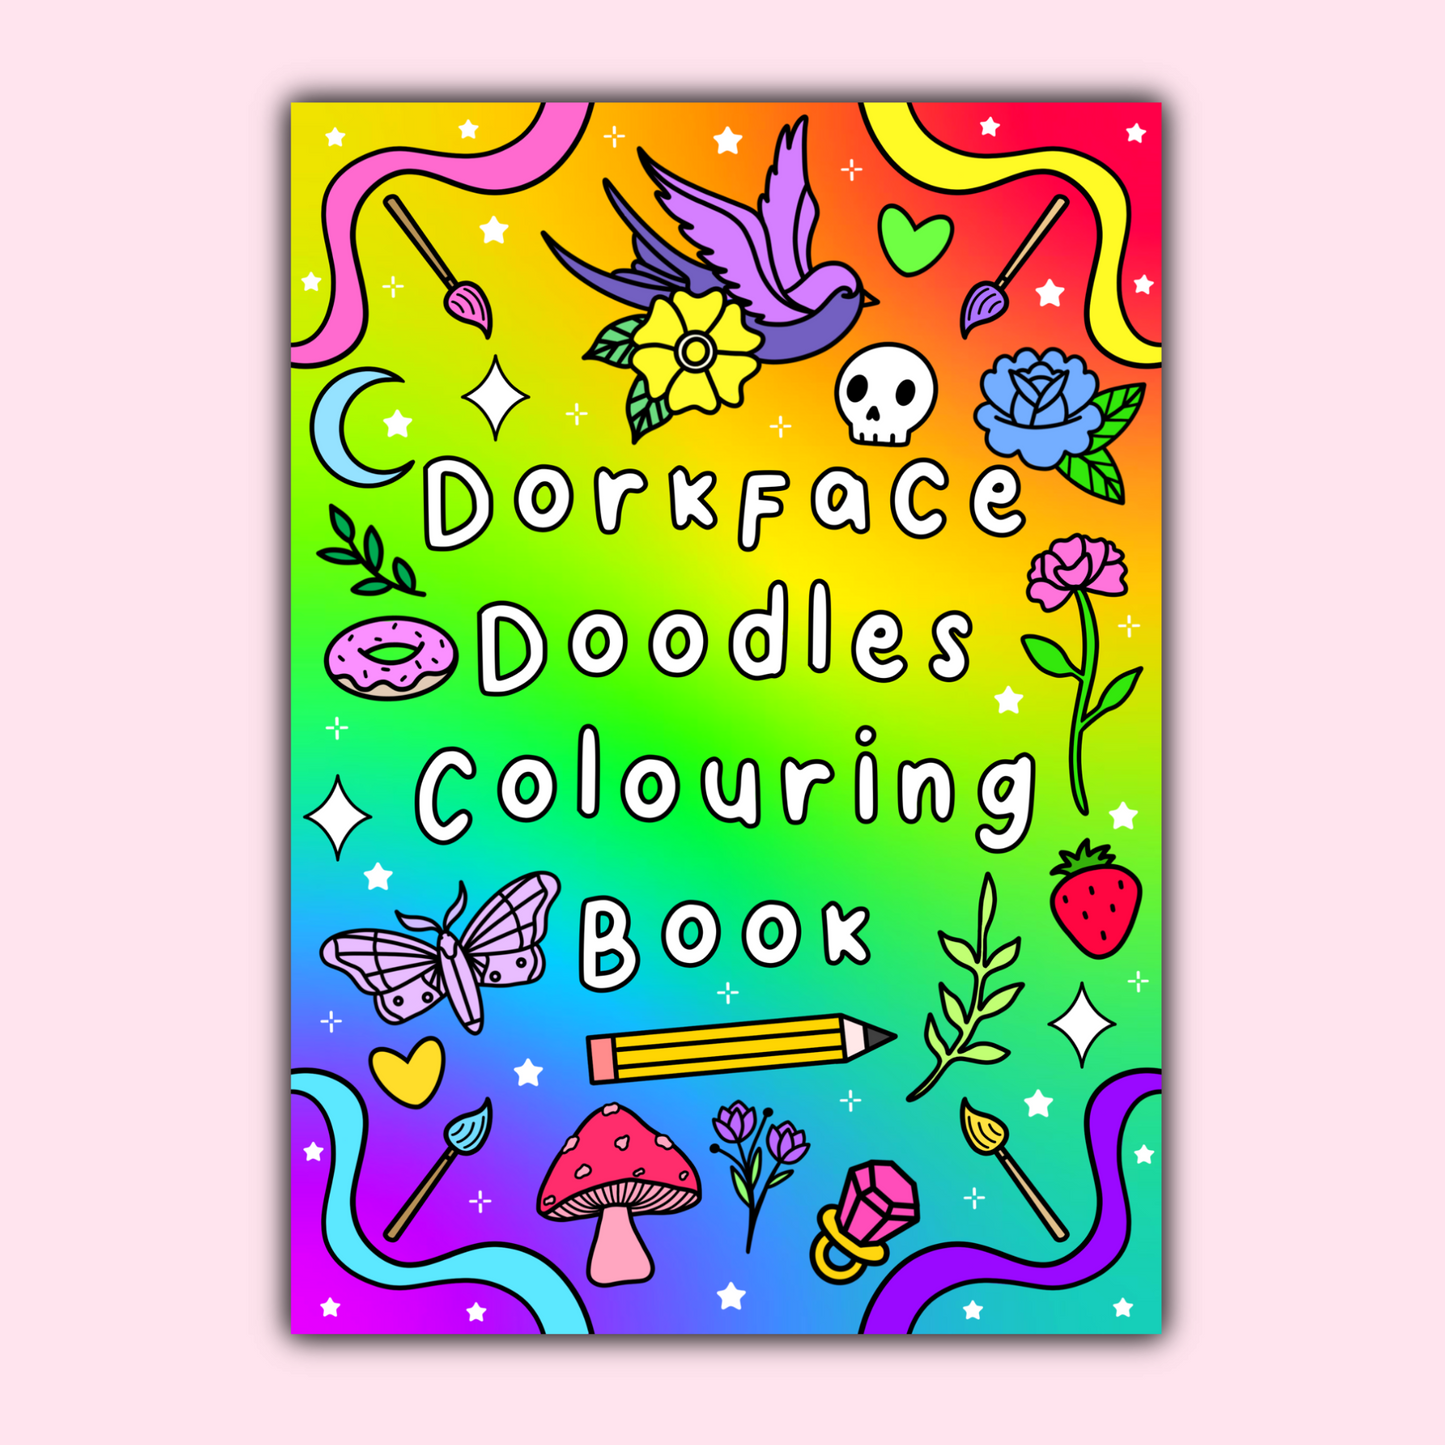 Dorkface Colouring Book